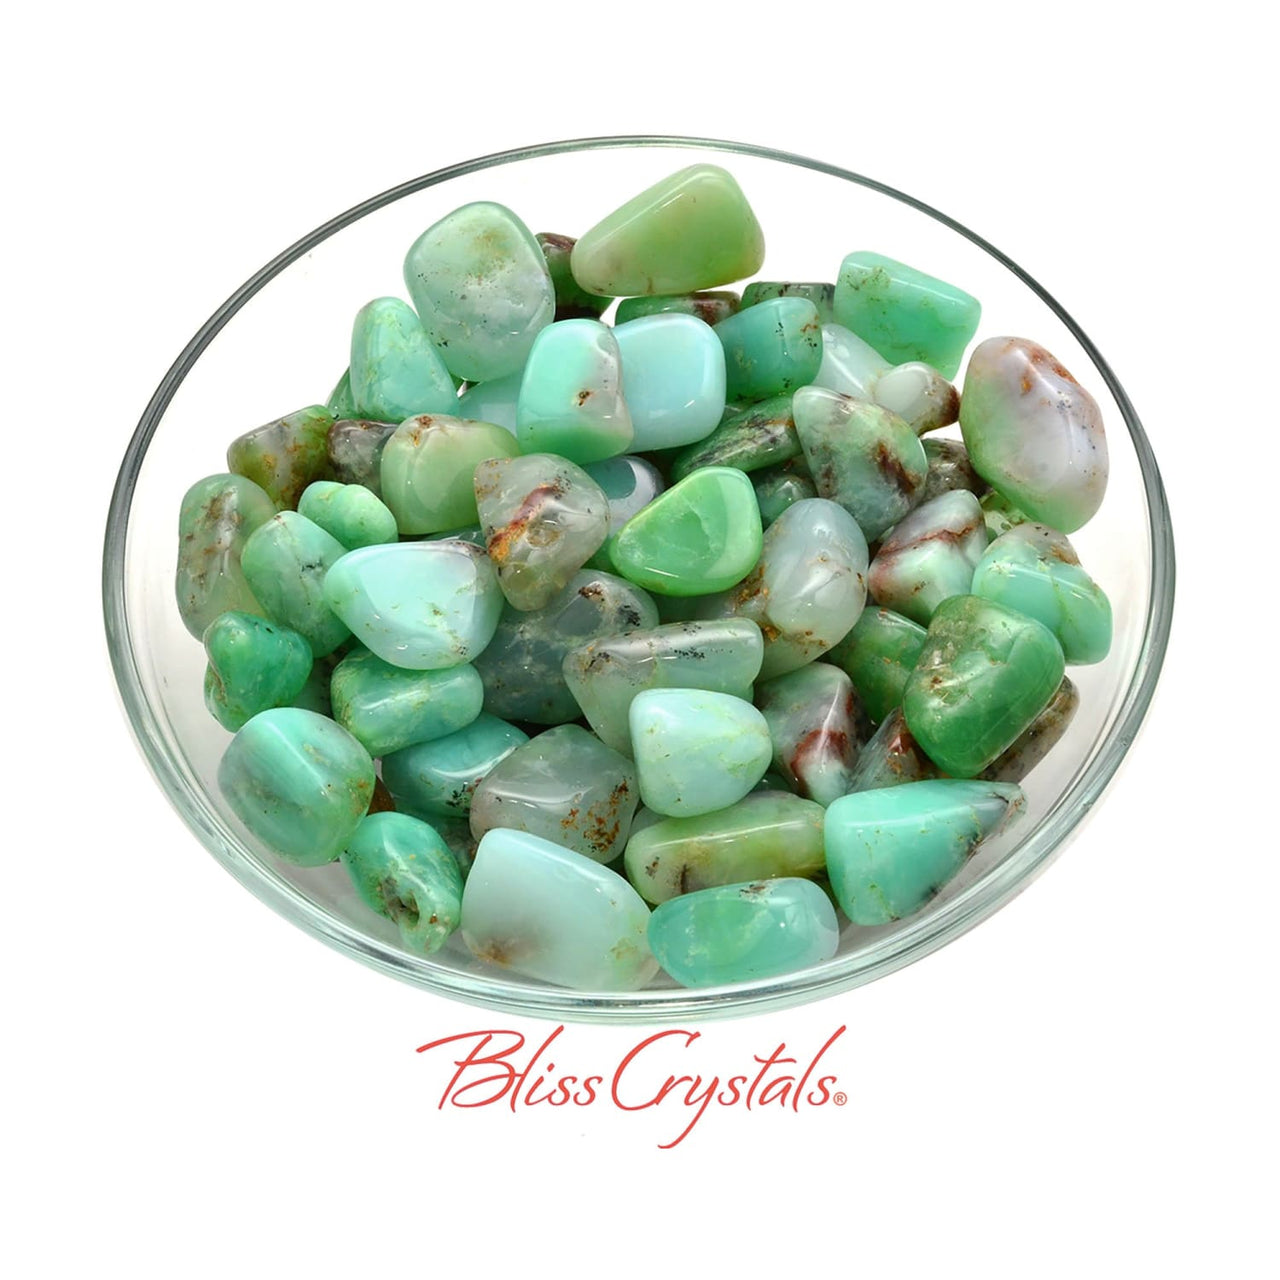 1 CHRYSOPRASE Medium Tumbled Stone Bright Green Crystal for 